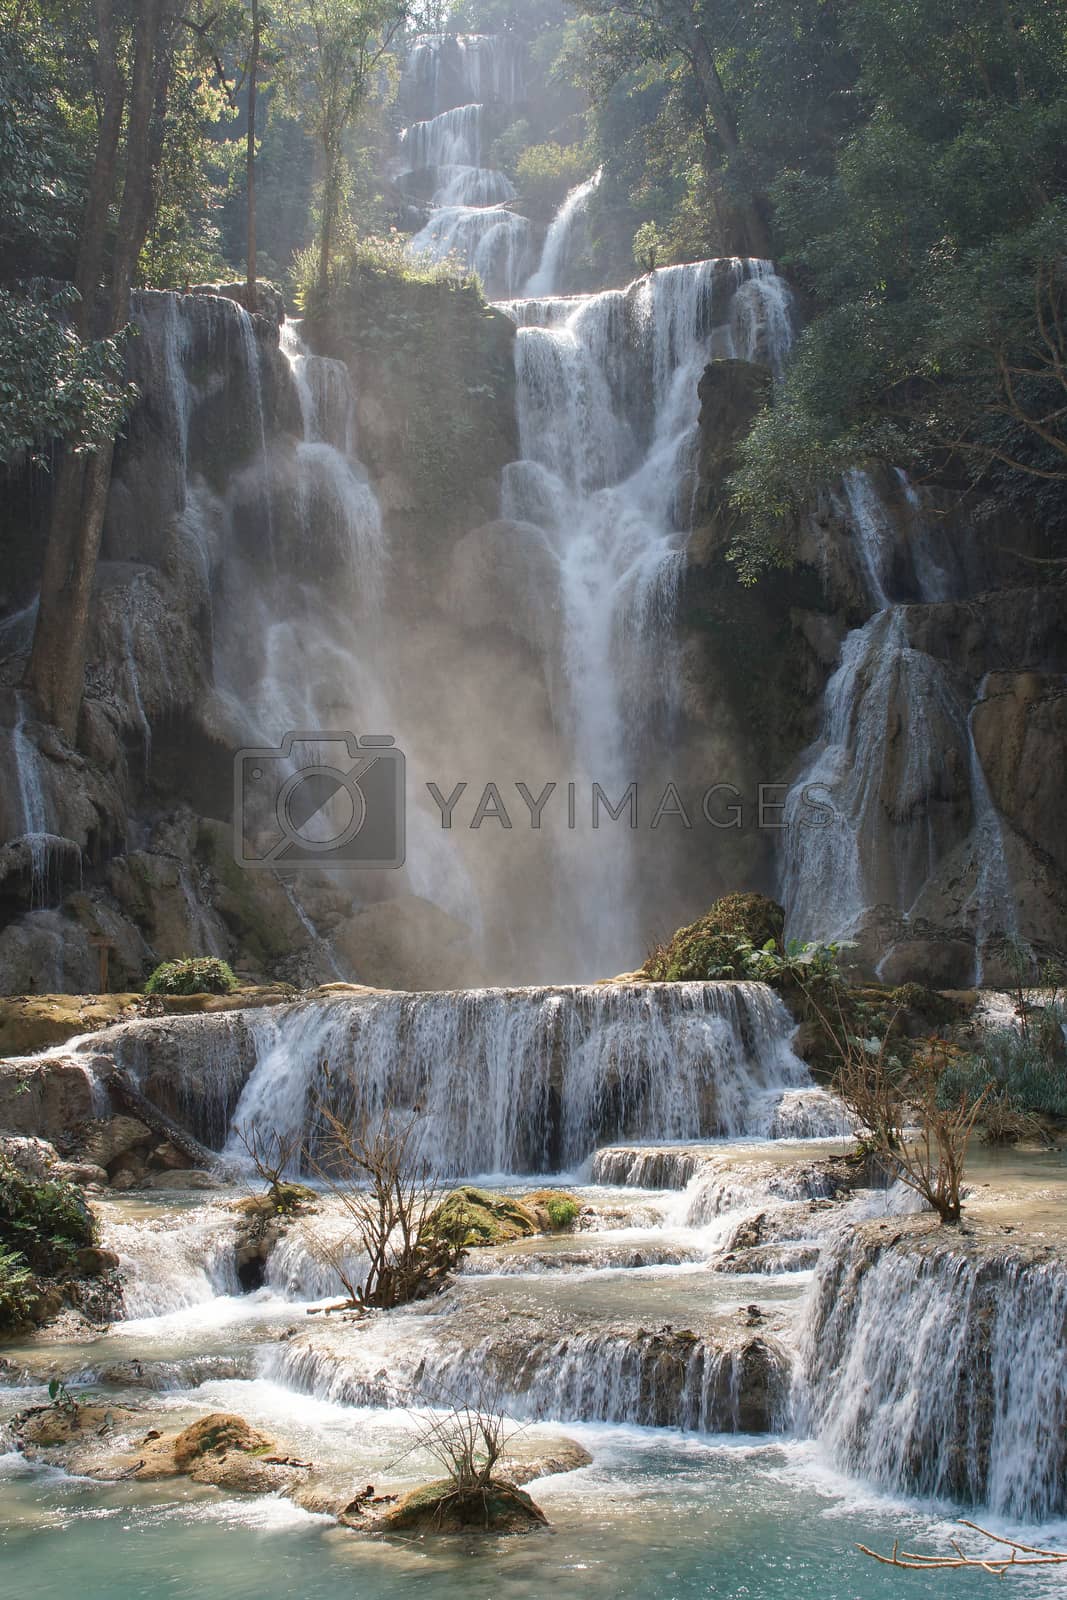 Royalty free image of Tat Kuang Si Waterfall, Laos by alfotokunst